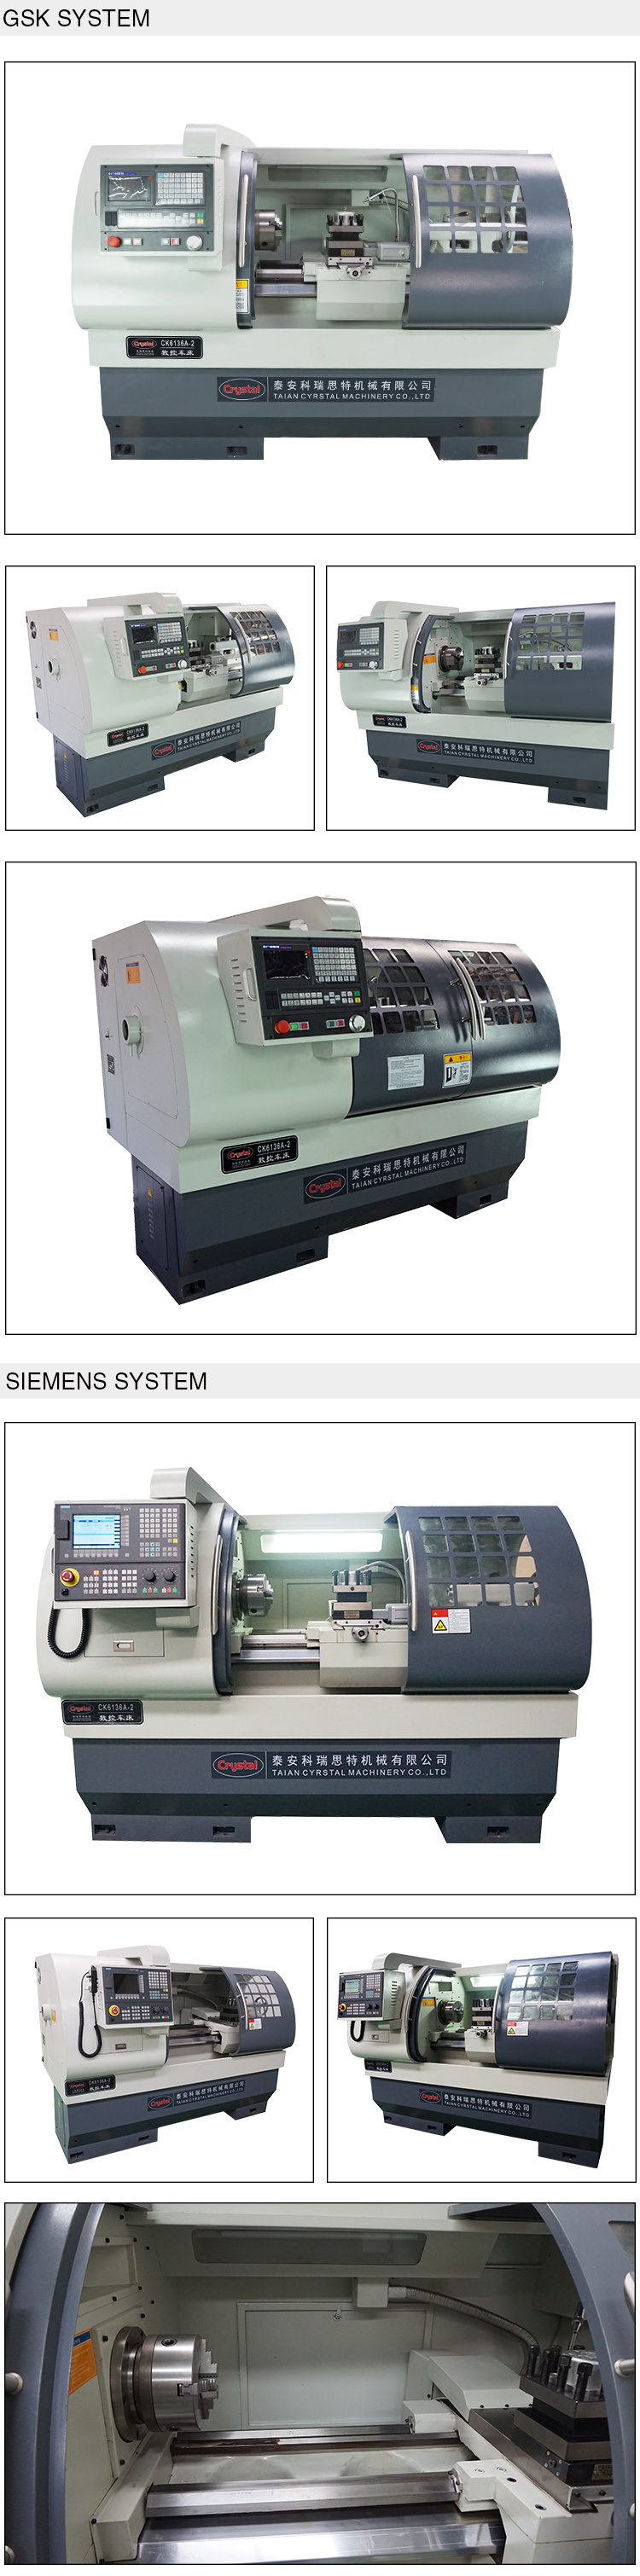 CNC Lathe Machine Brand Siemens 808d Lathe Controller